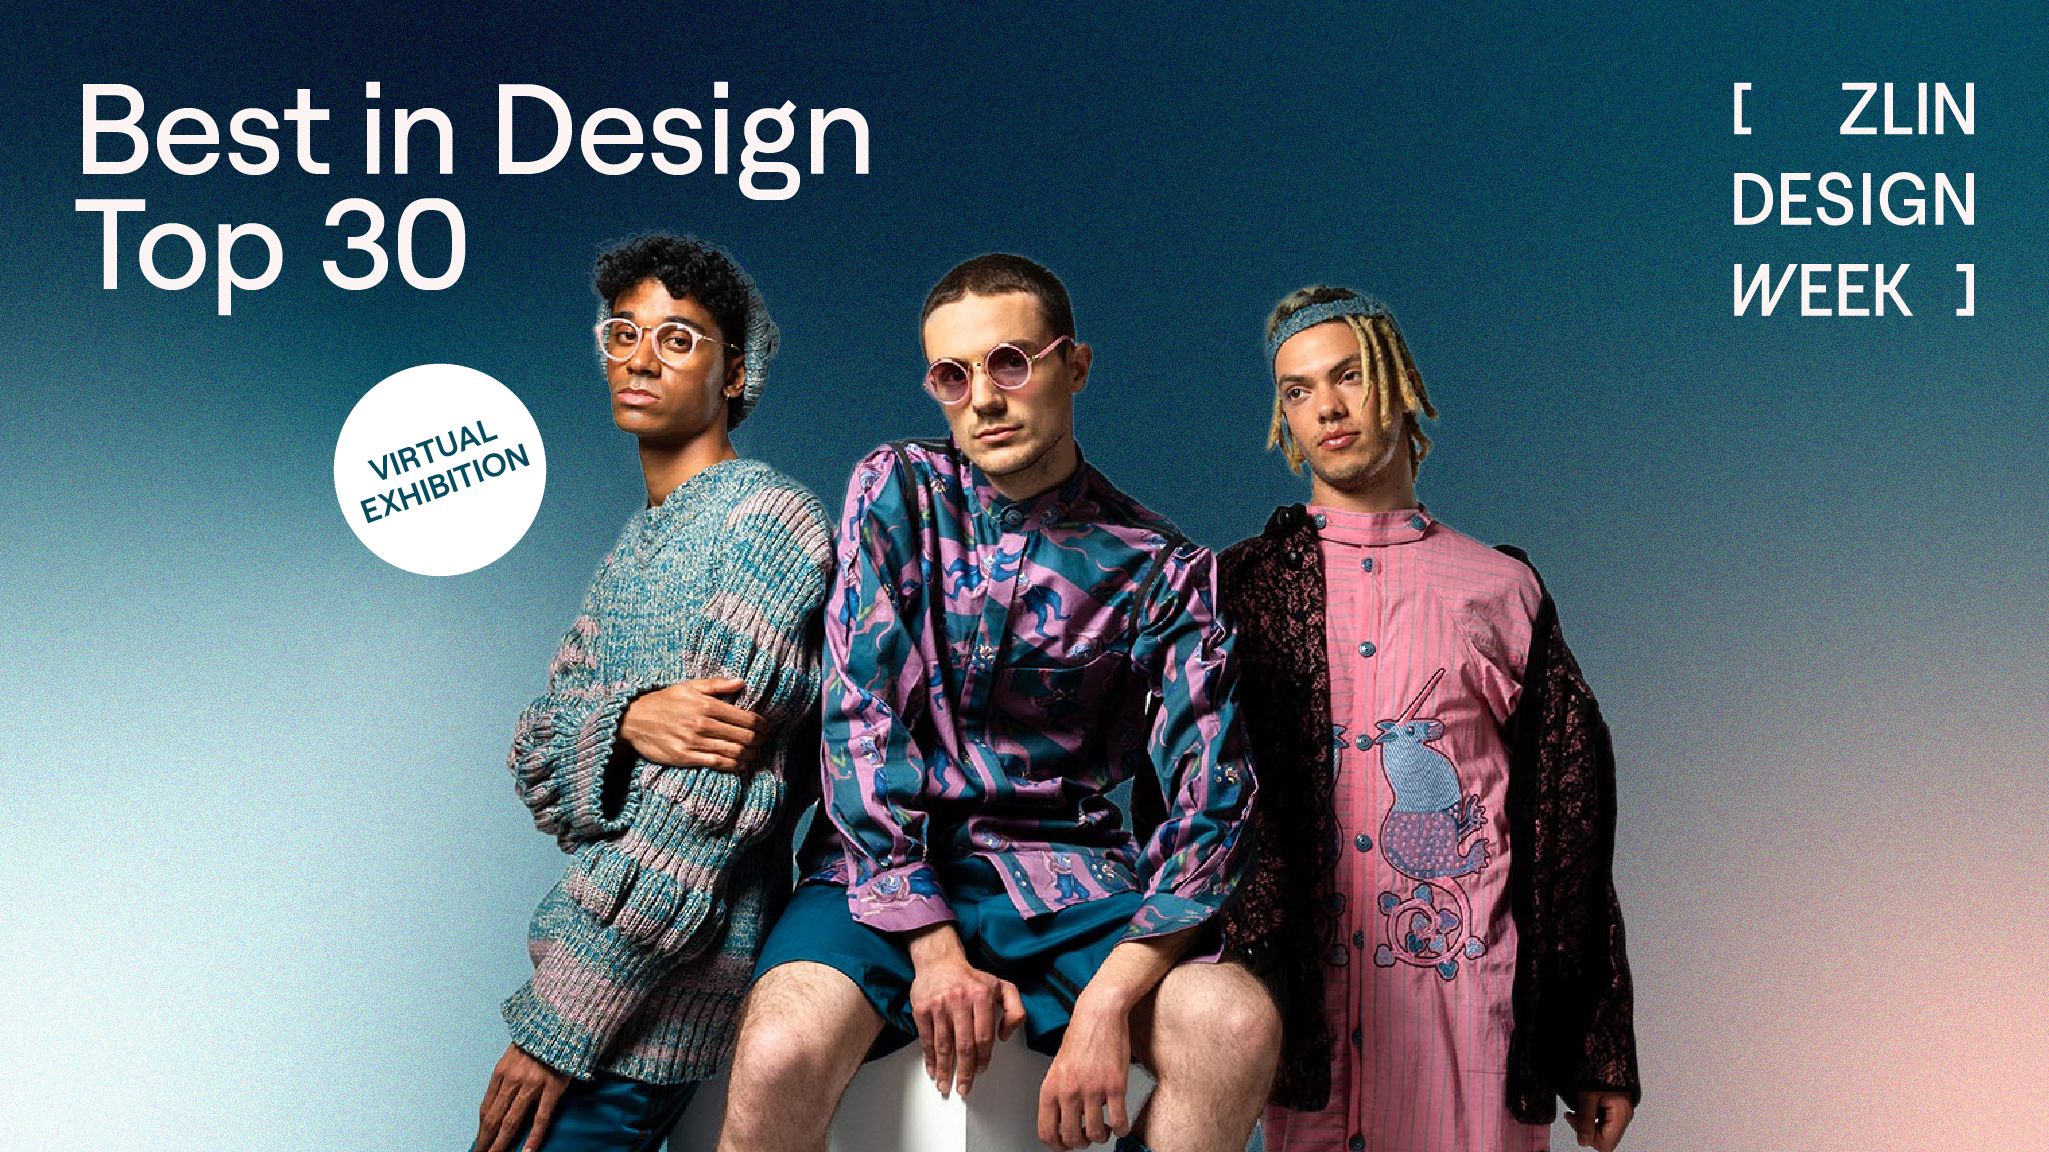 You can’t stop design | Zlin Design Week